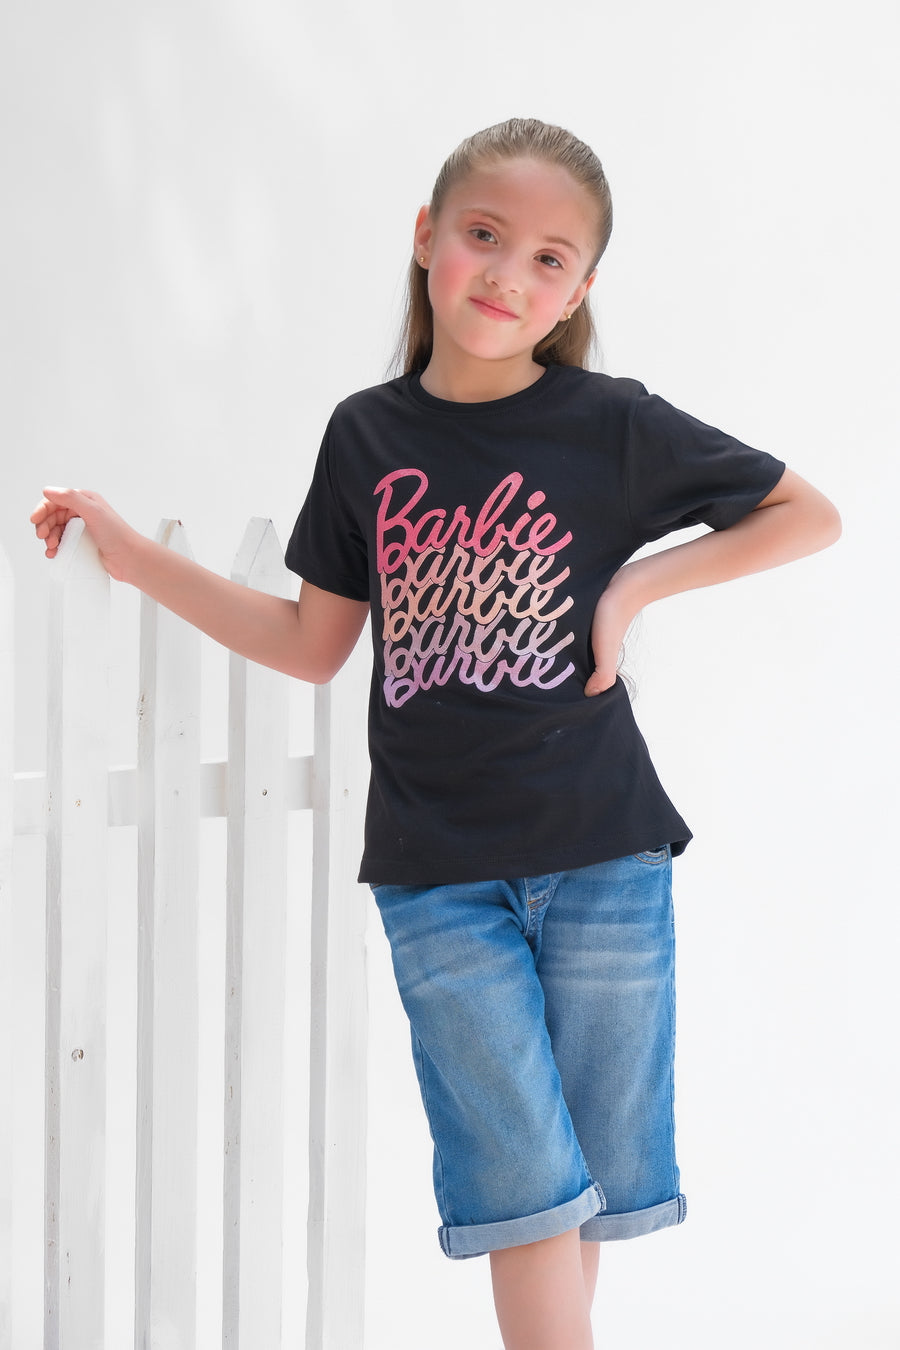 Barbie - Half Sleeves T-shirts For Kids - Black